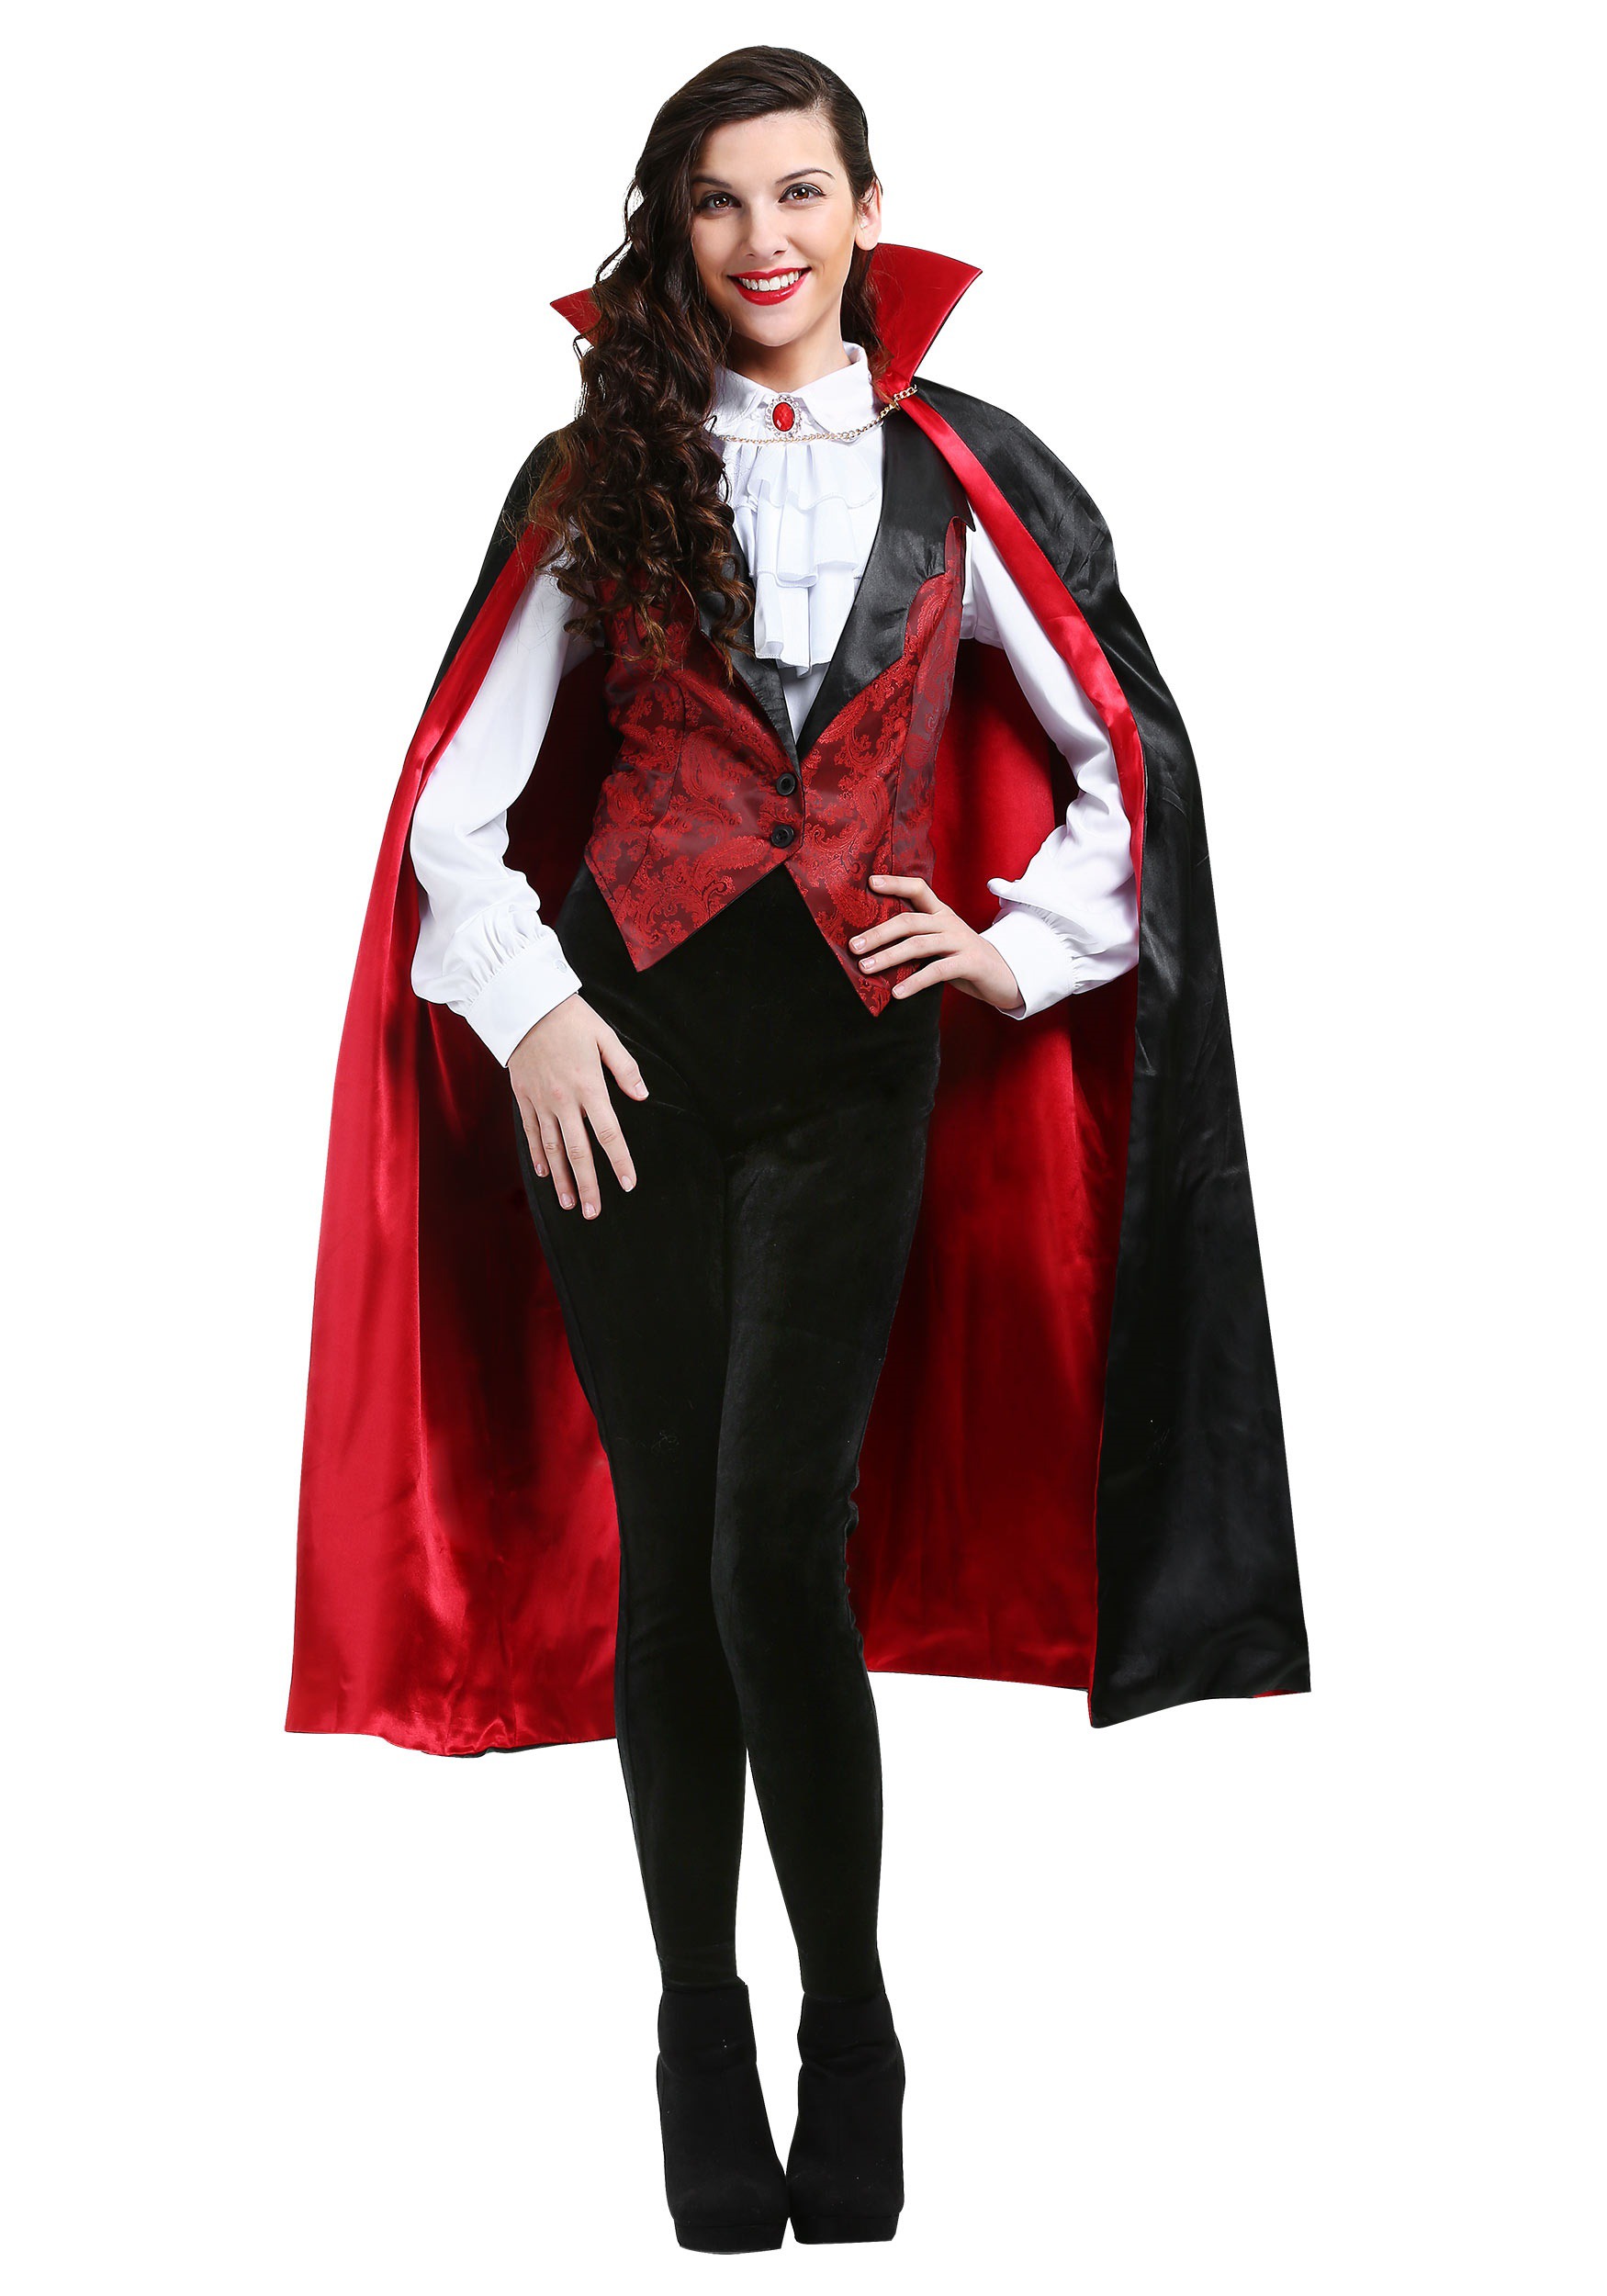 https://images.halloweencostumes.com.mx/products/41203/1-1/disfraz-de-vampiro-feroz-de-mujer-talla-grande.jpg